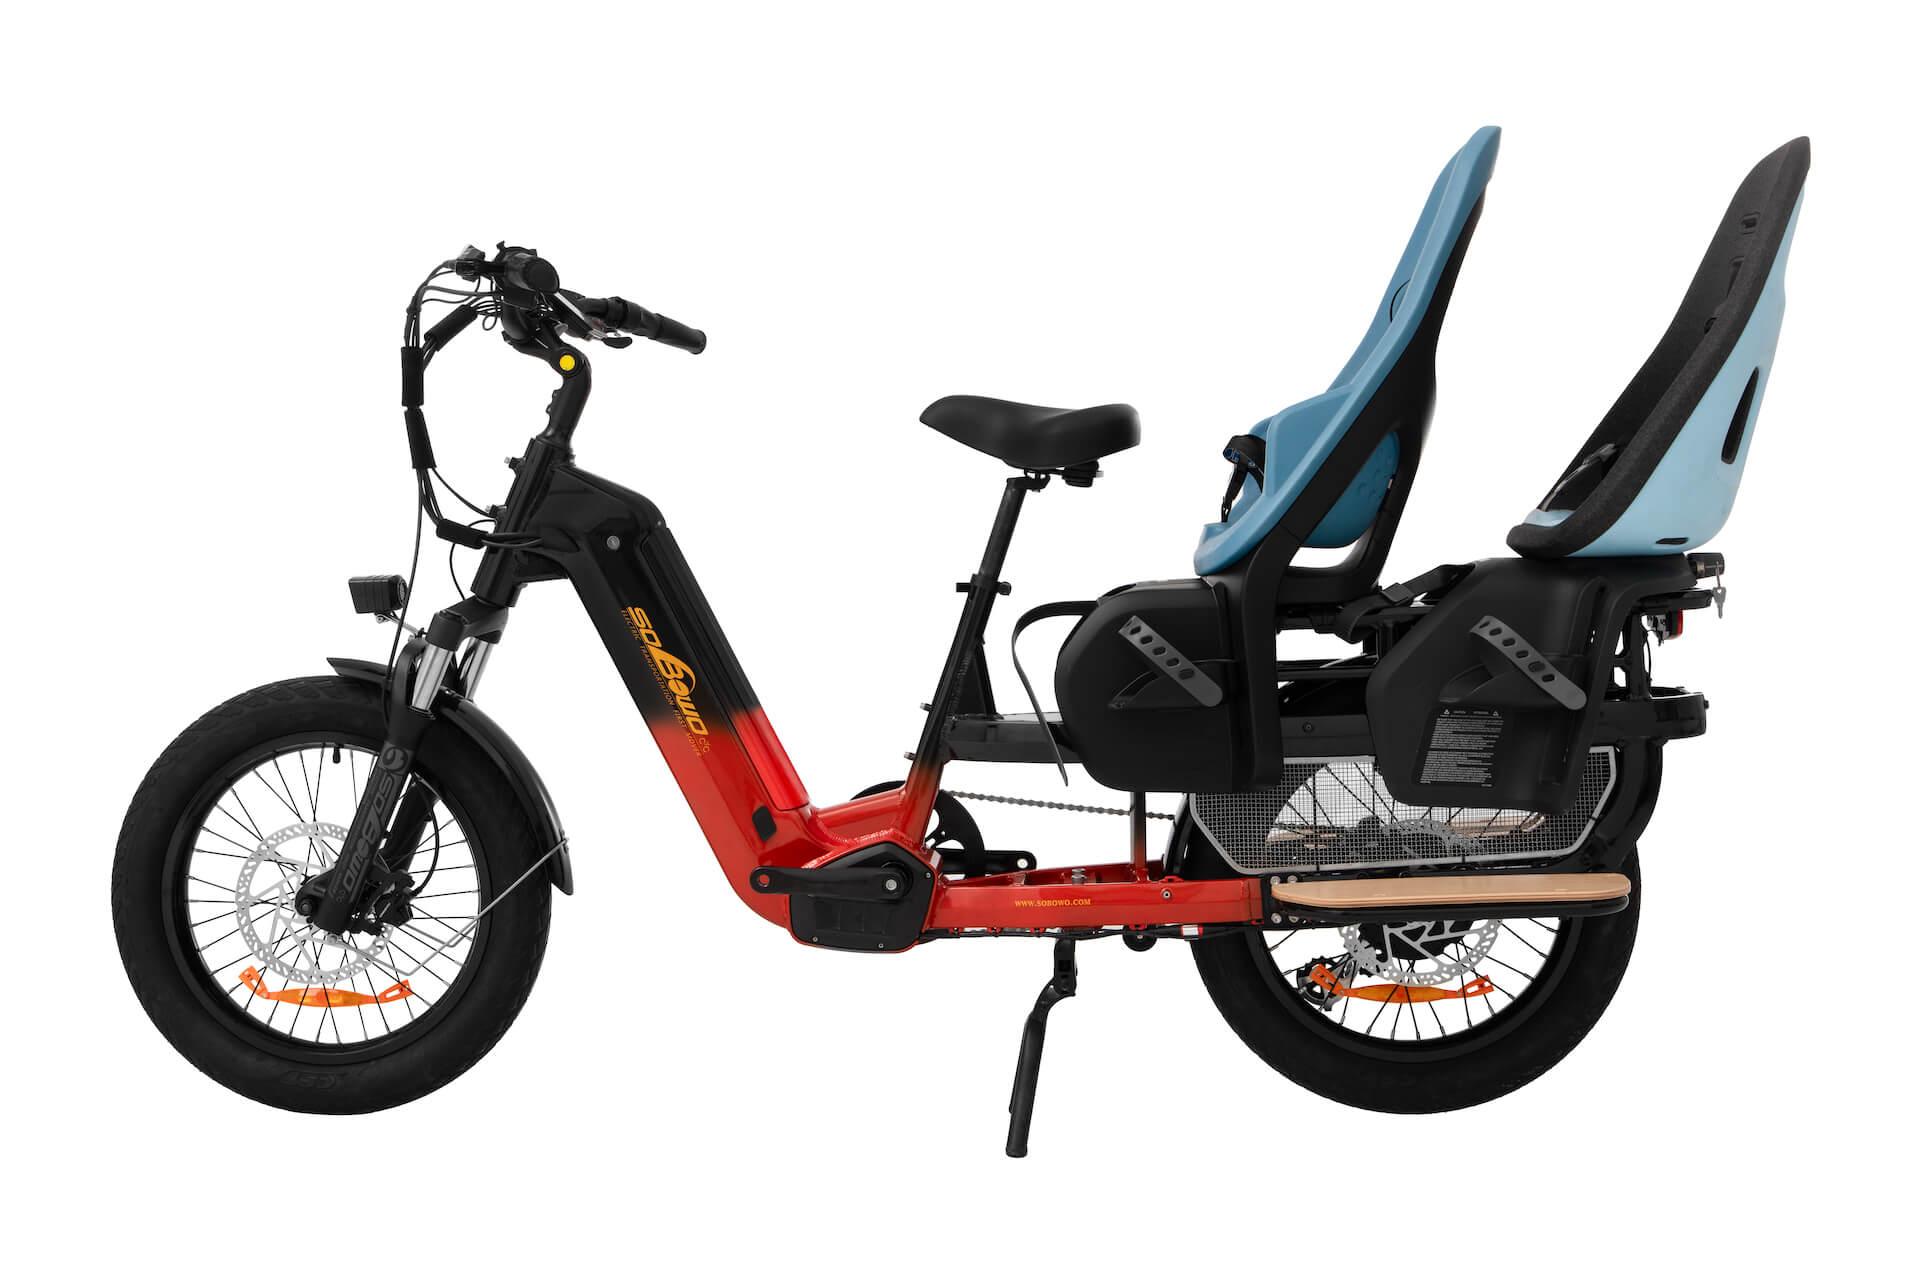 sobowo electric cargo bike Sienna with two seats